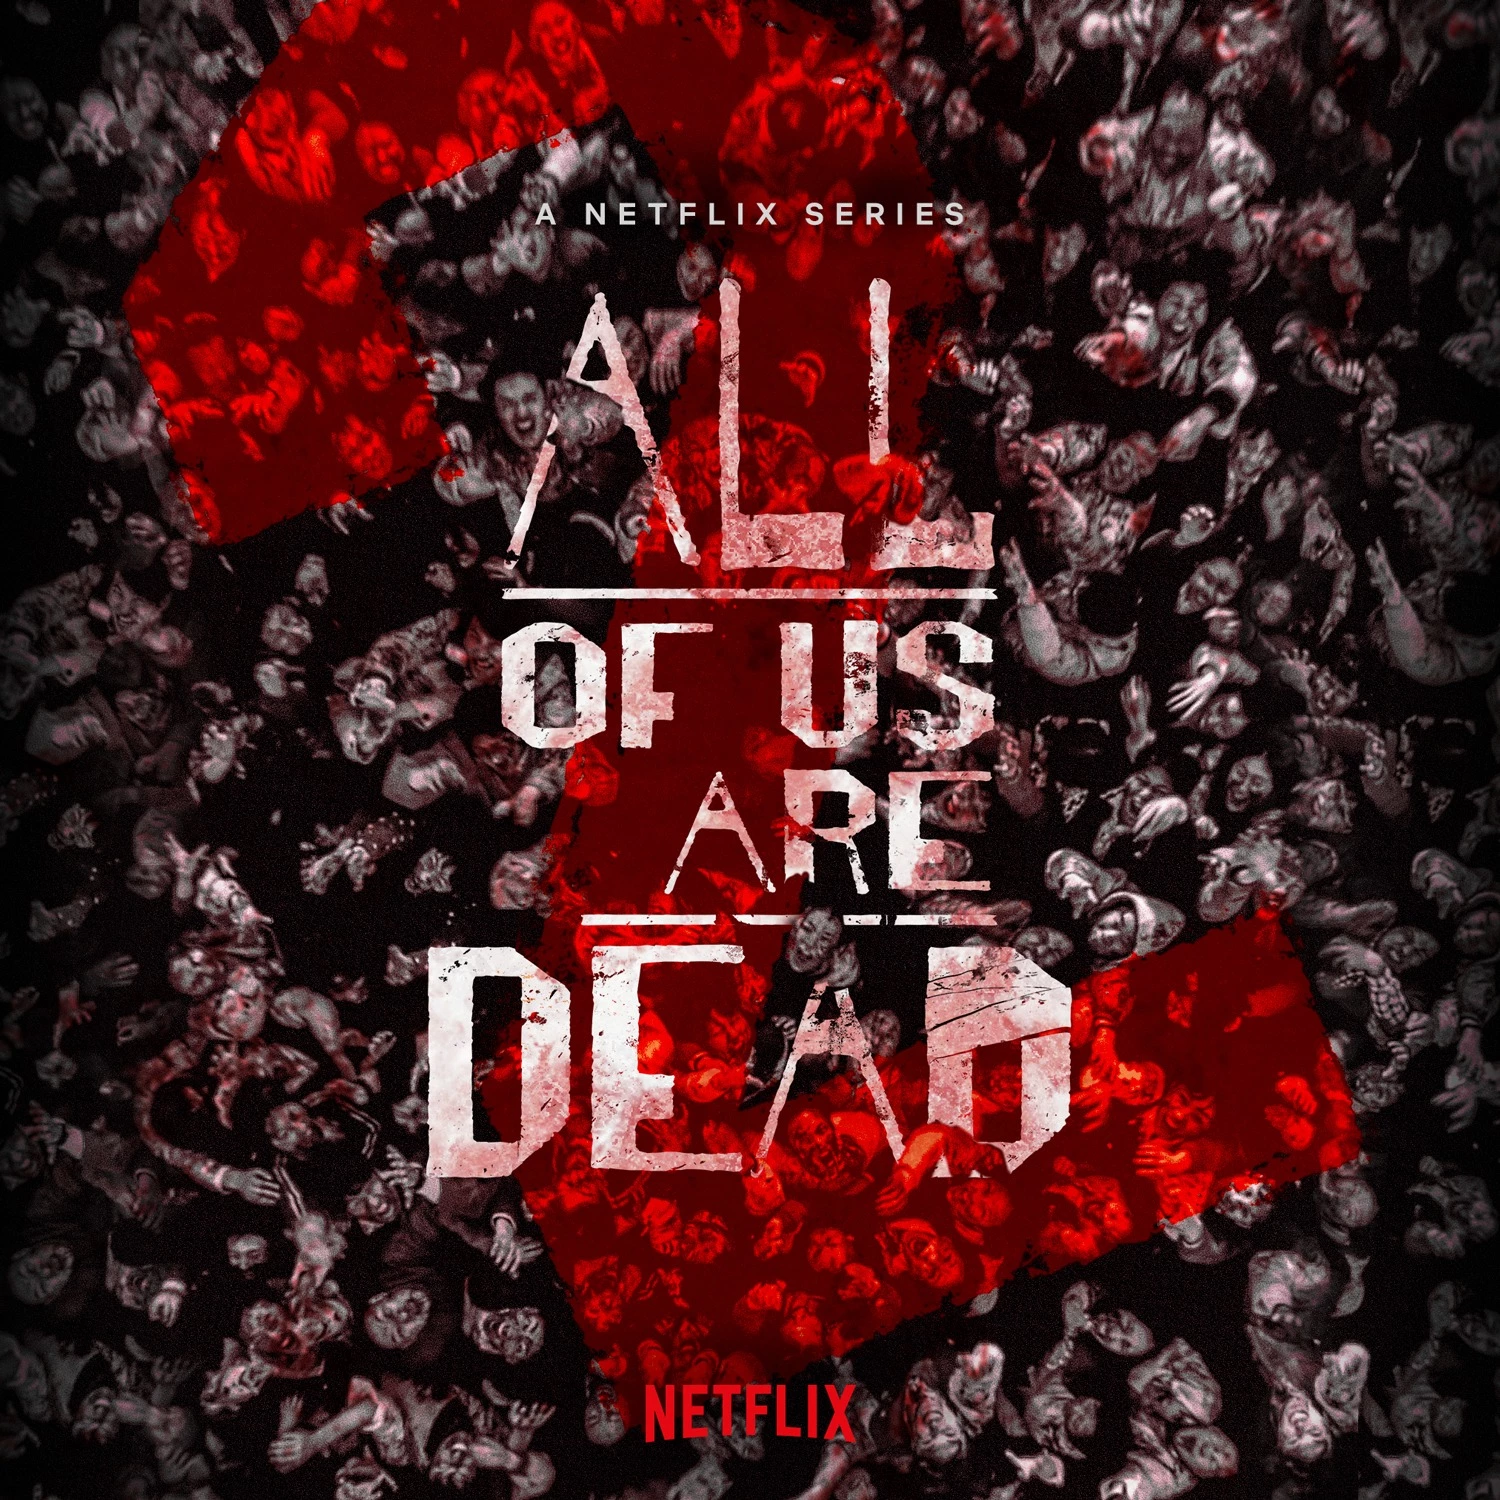 All Of Us Are Dead Season 2 Announcement